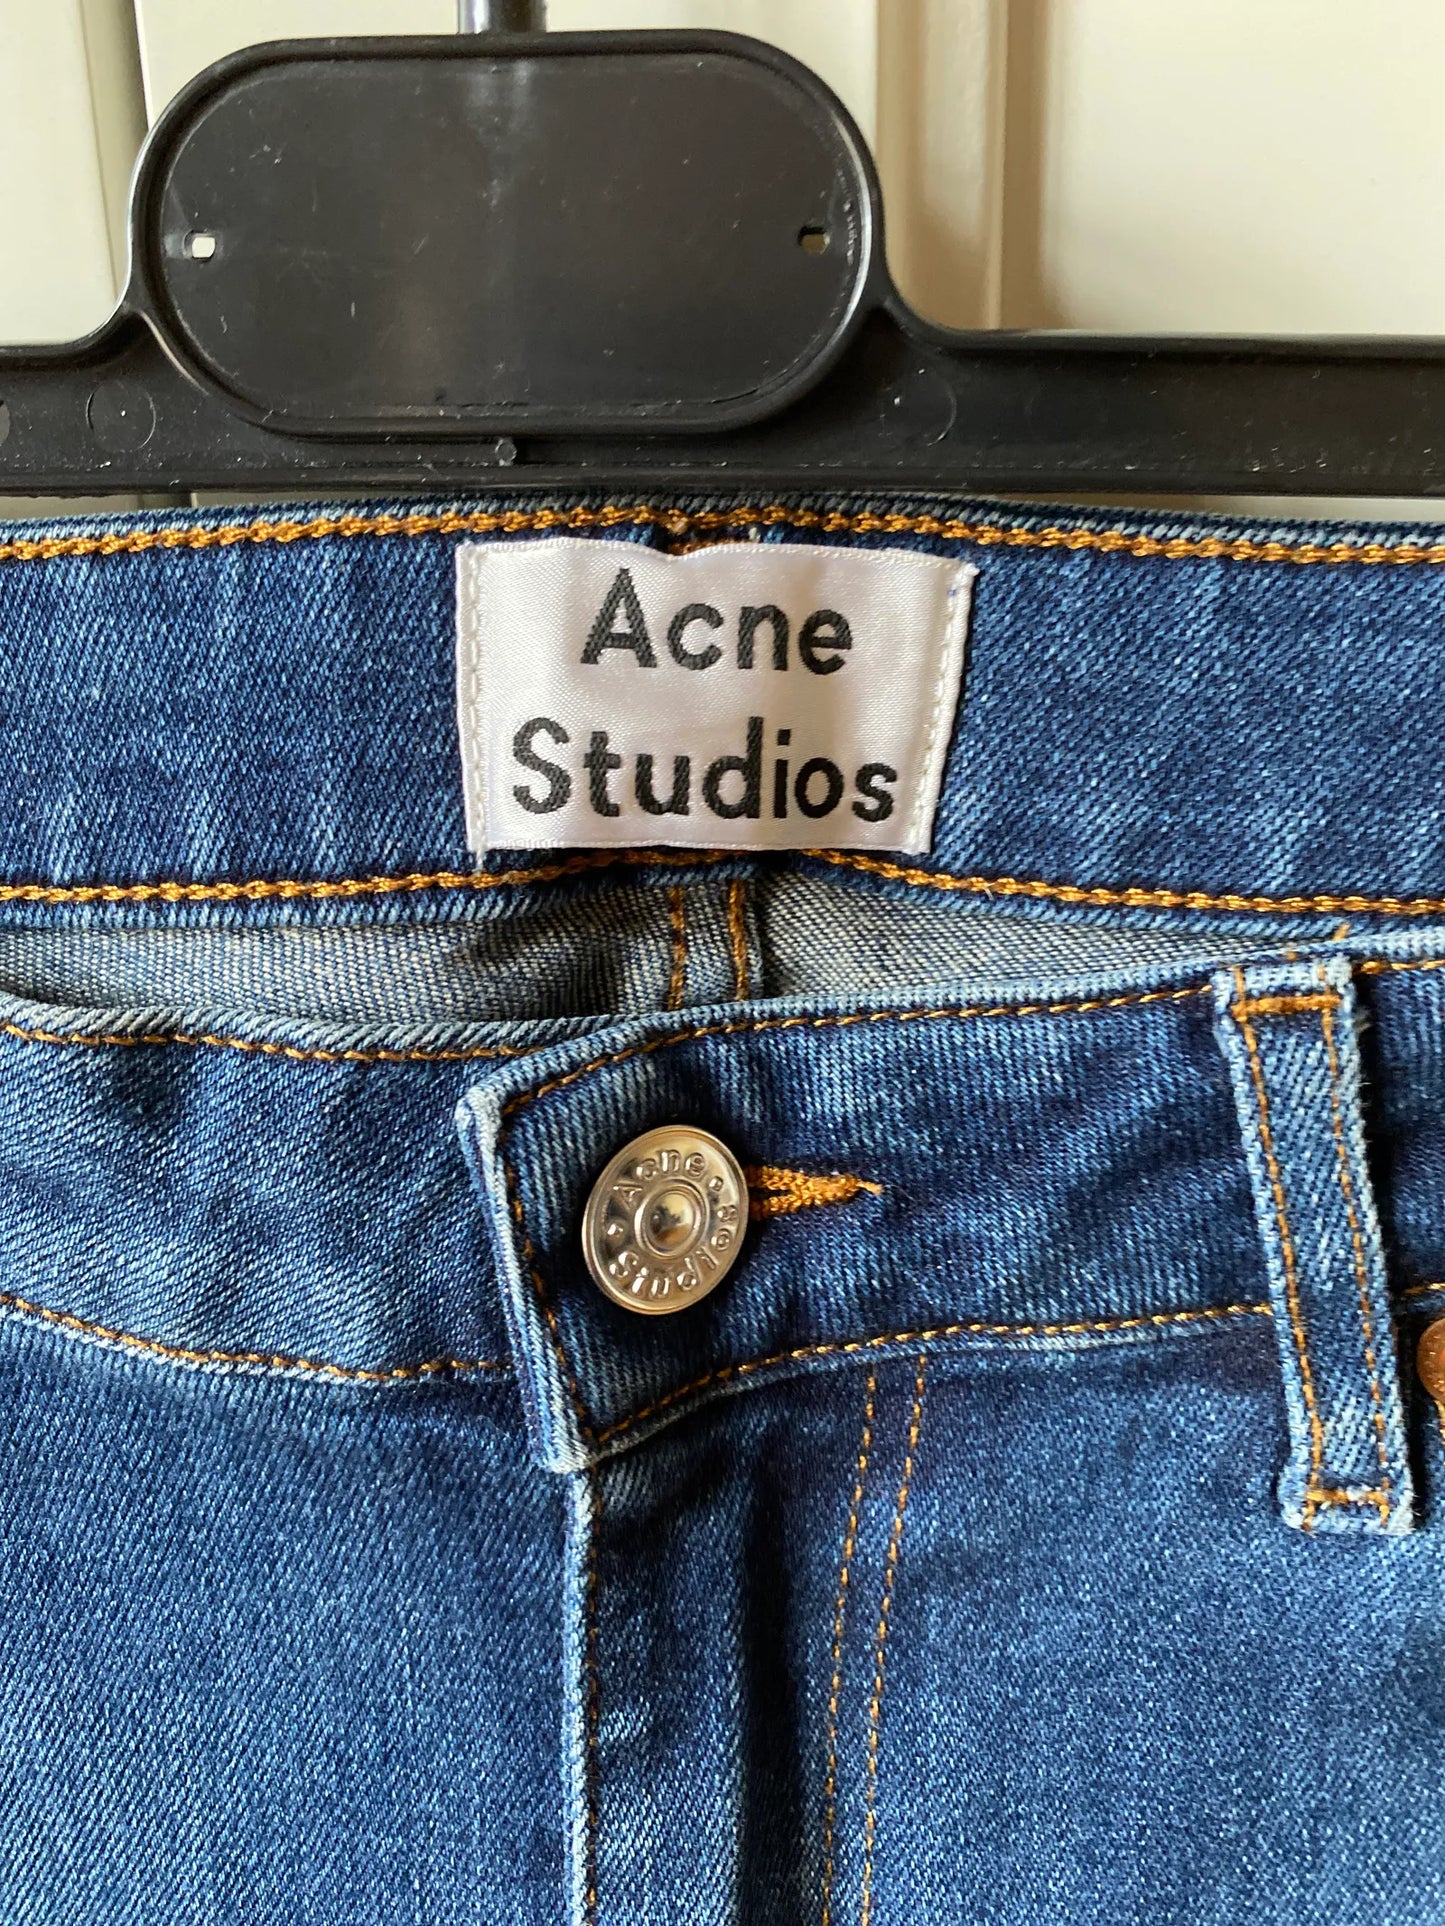 Acne Studios Skin 5 Marylin-jeans